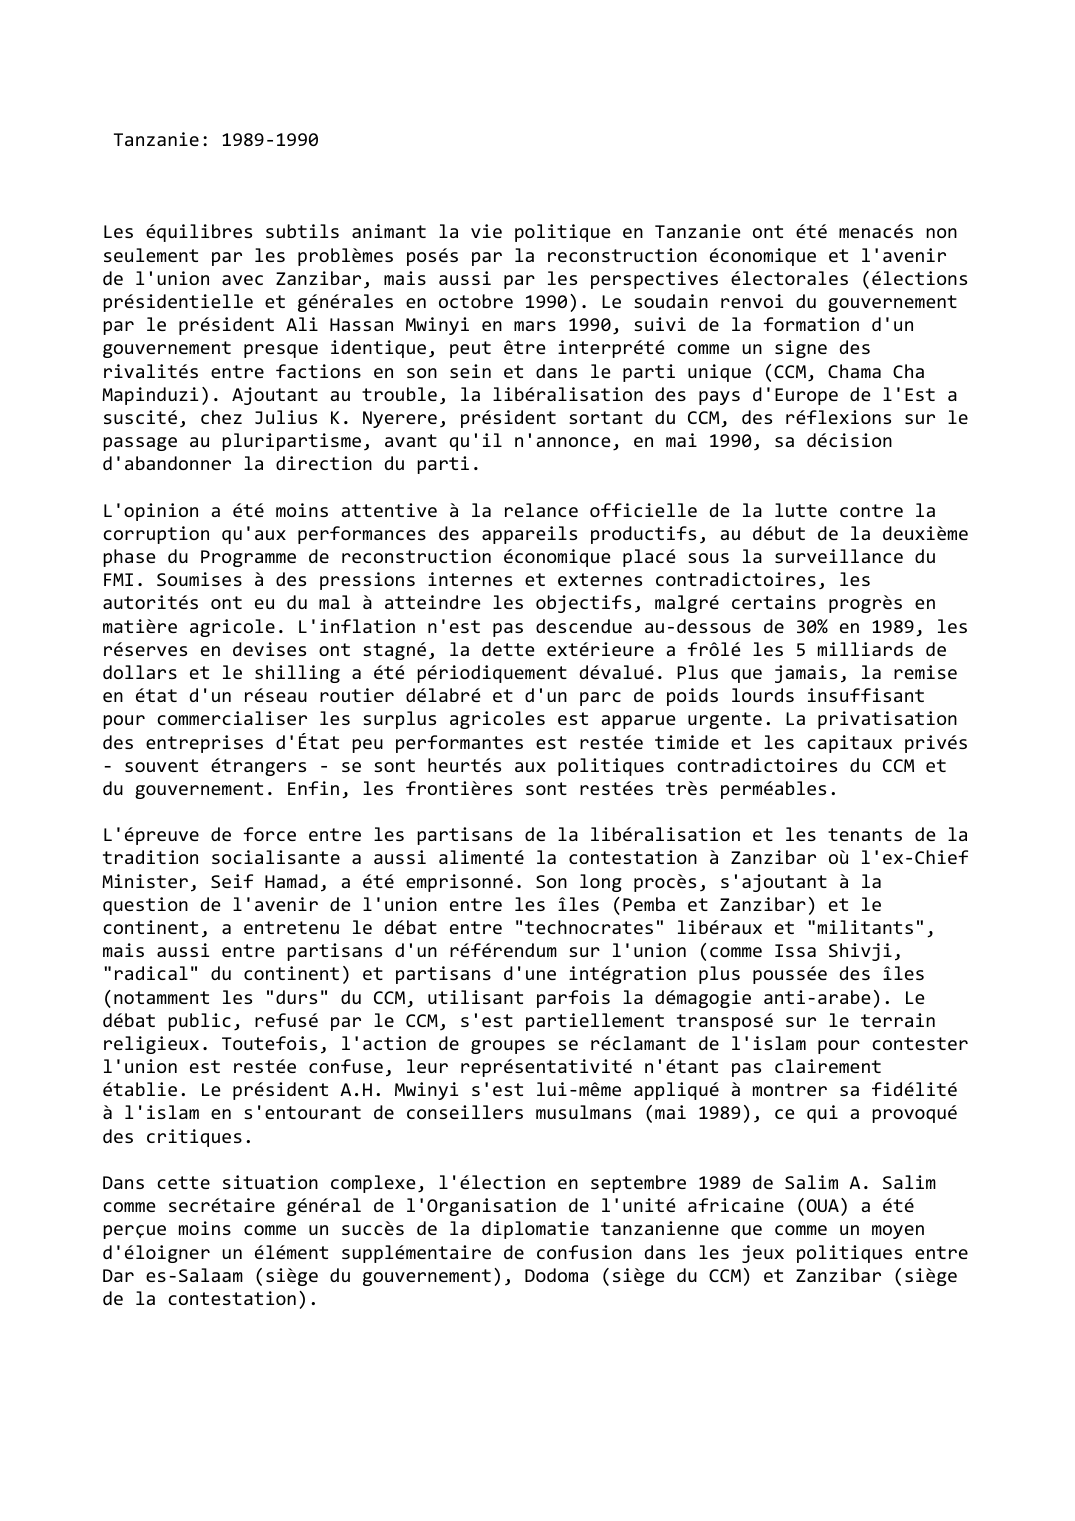 Prévisualisation du document Tanzanie: 1989-1990